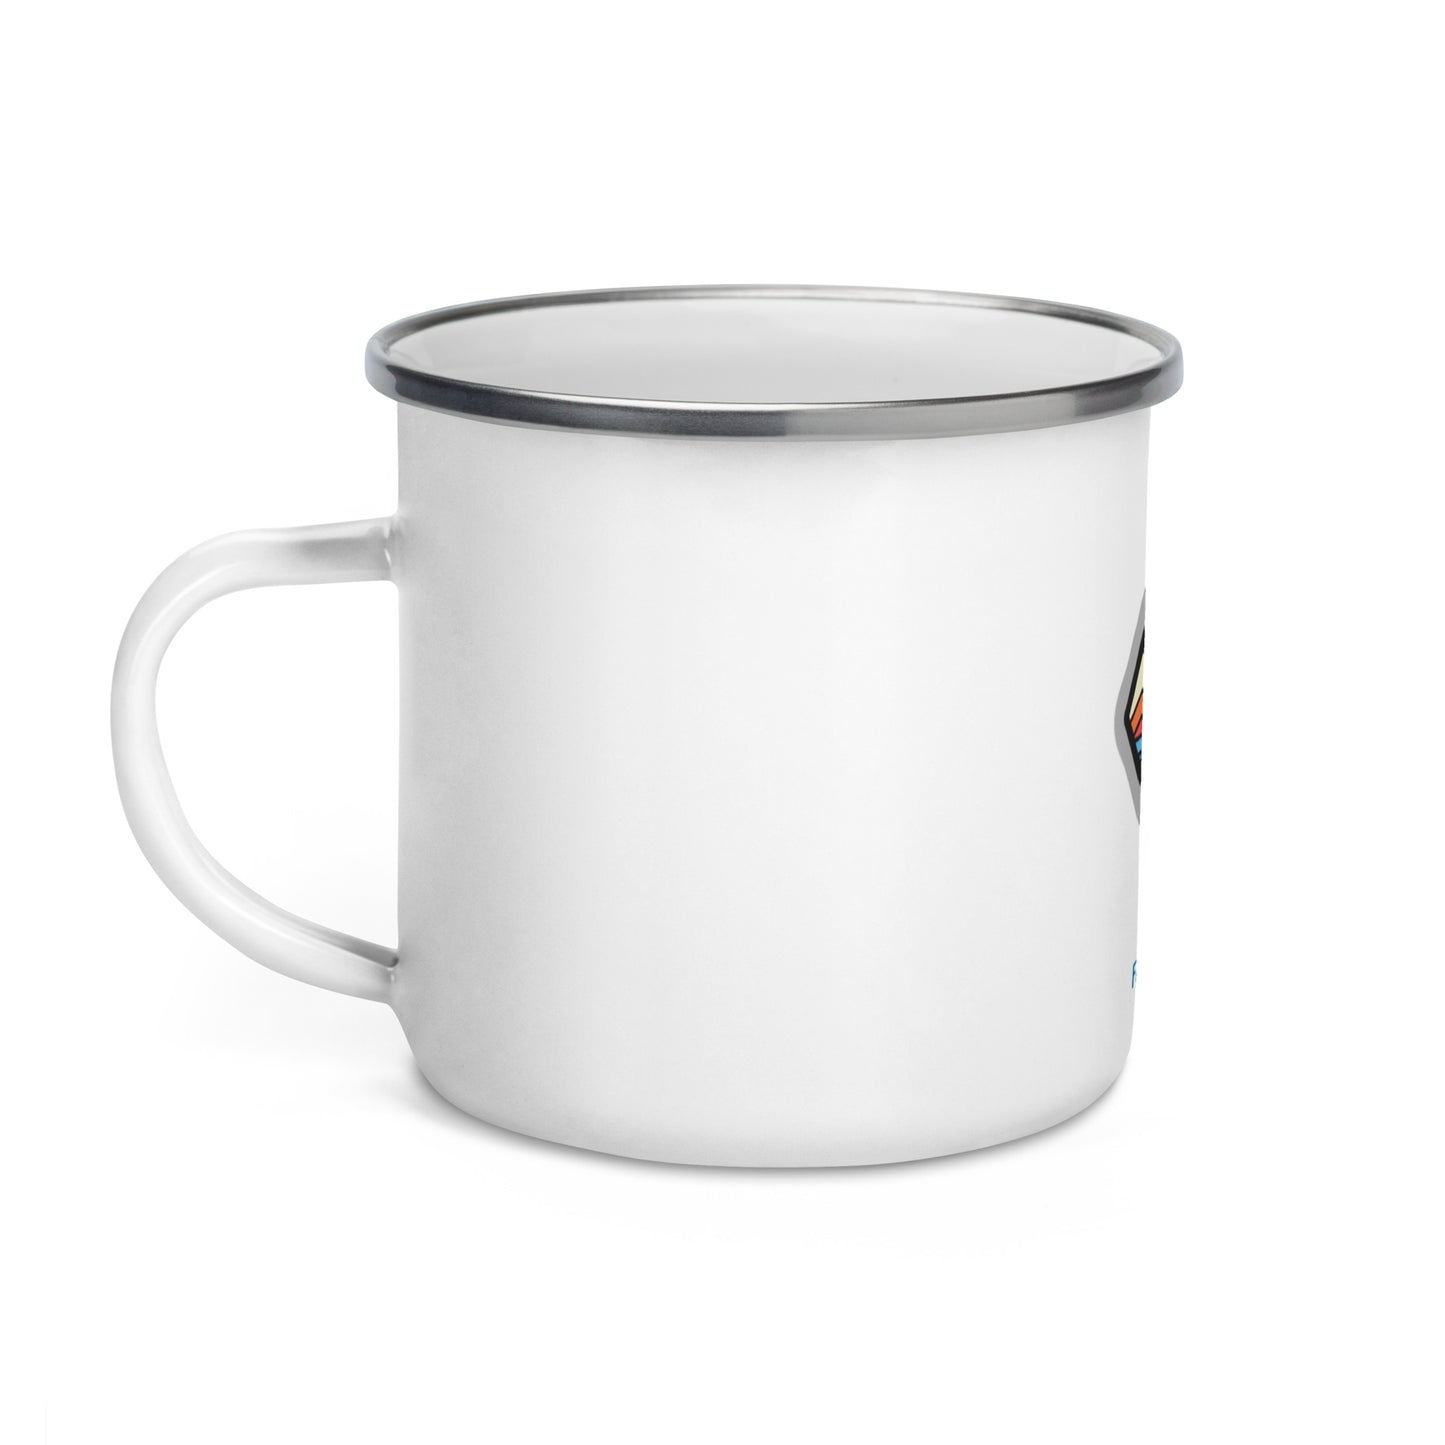 SURF WORLD Enamel Mug - White Drinkware